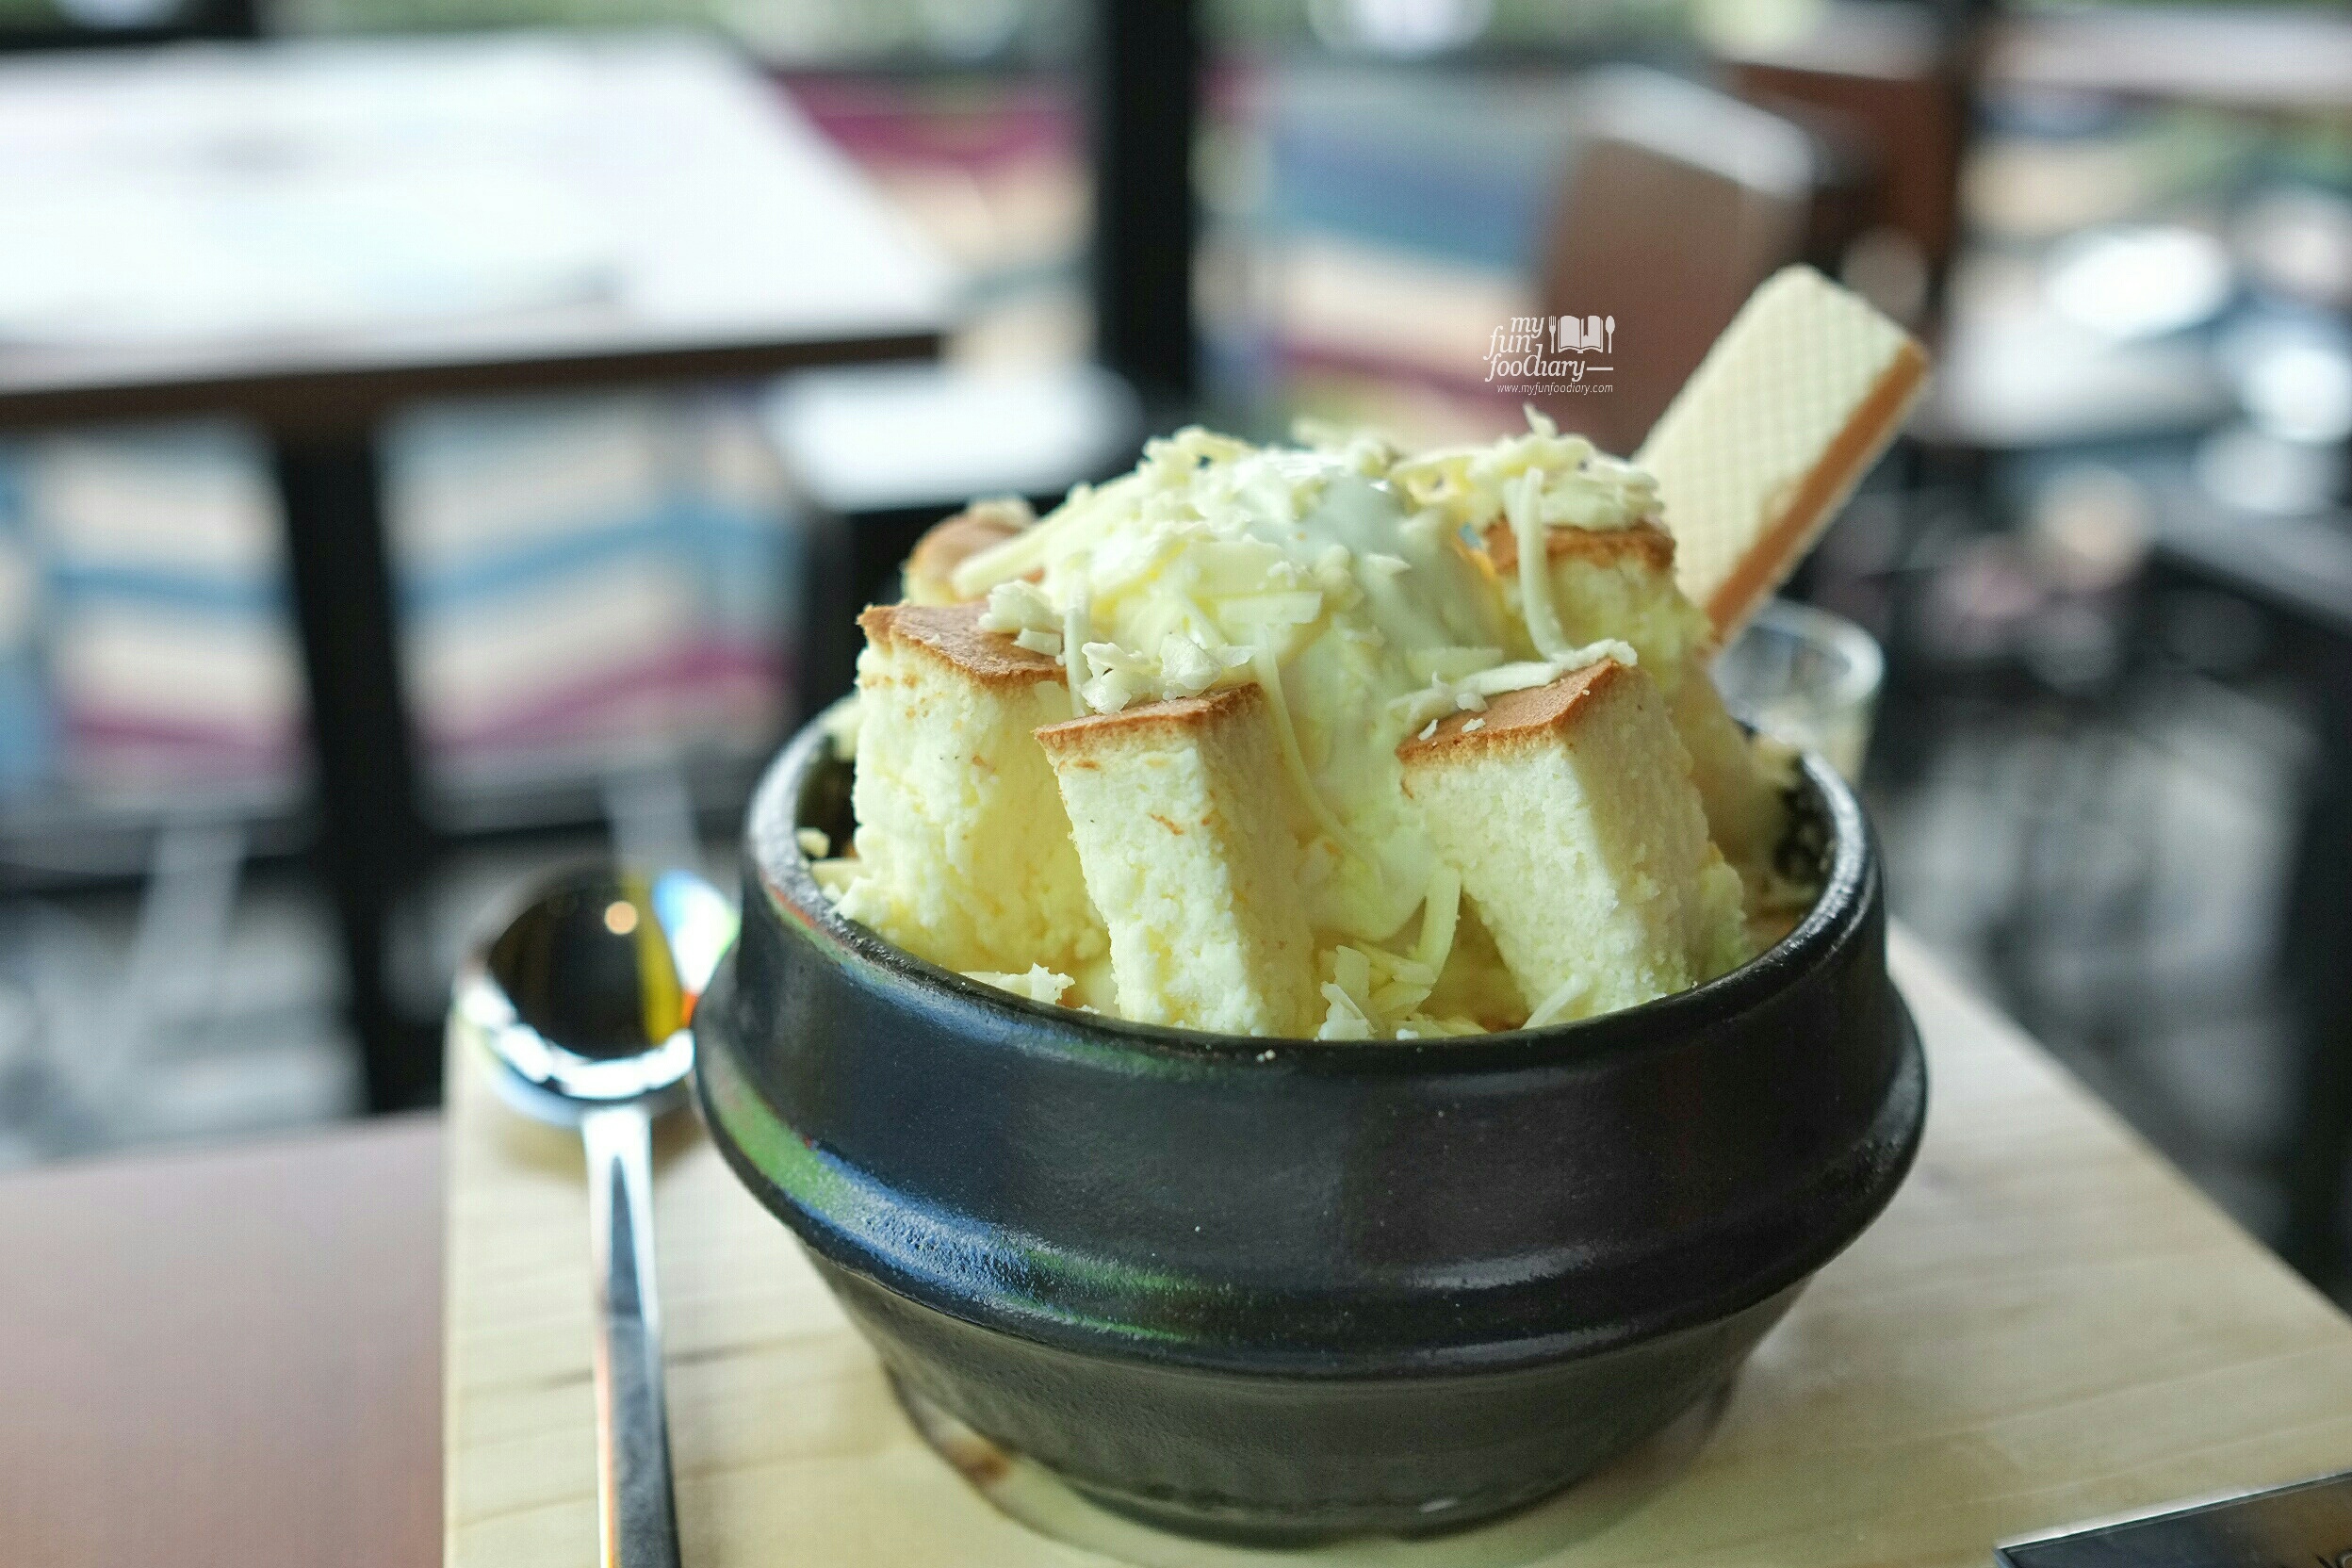 Abgujeong Bingsoo at Pat Bing Soo Korean Dessert House by Myfunfoodiary 02